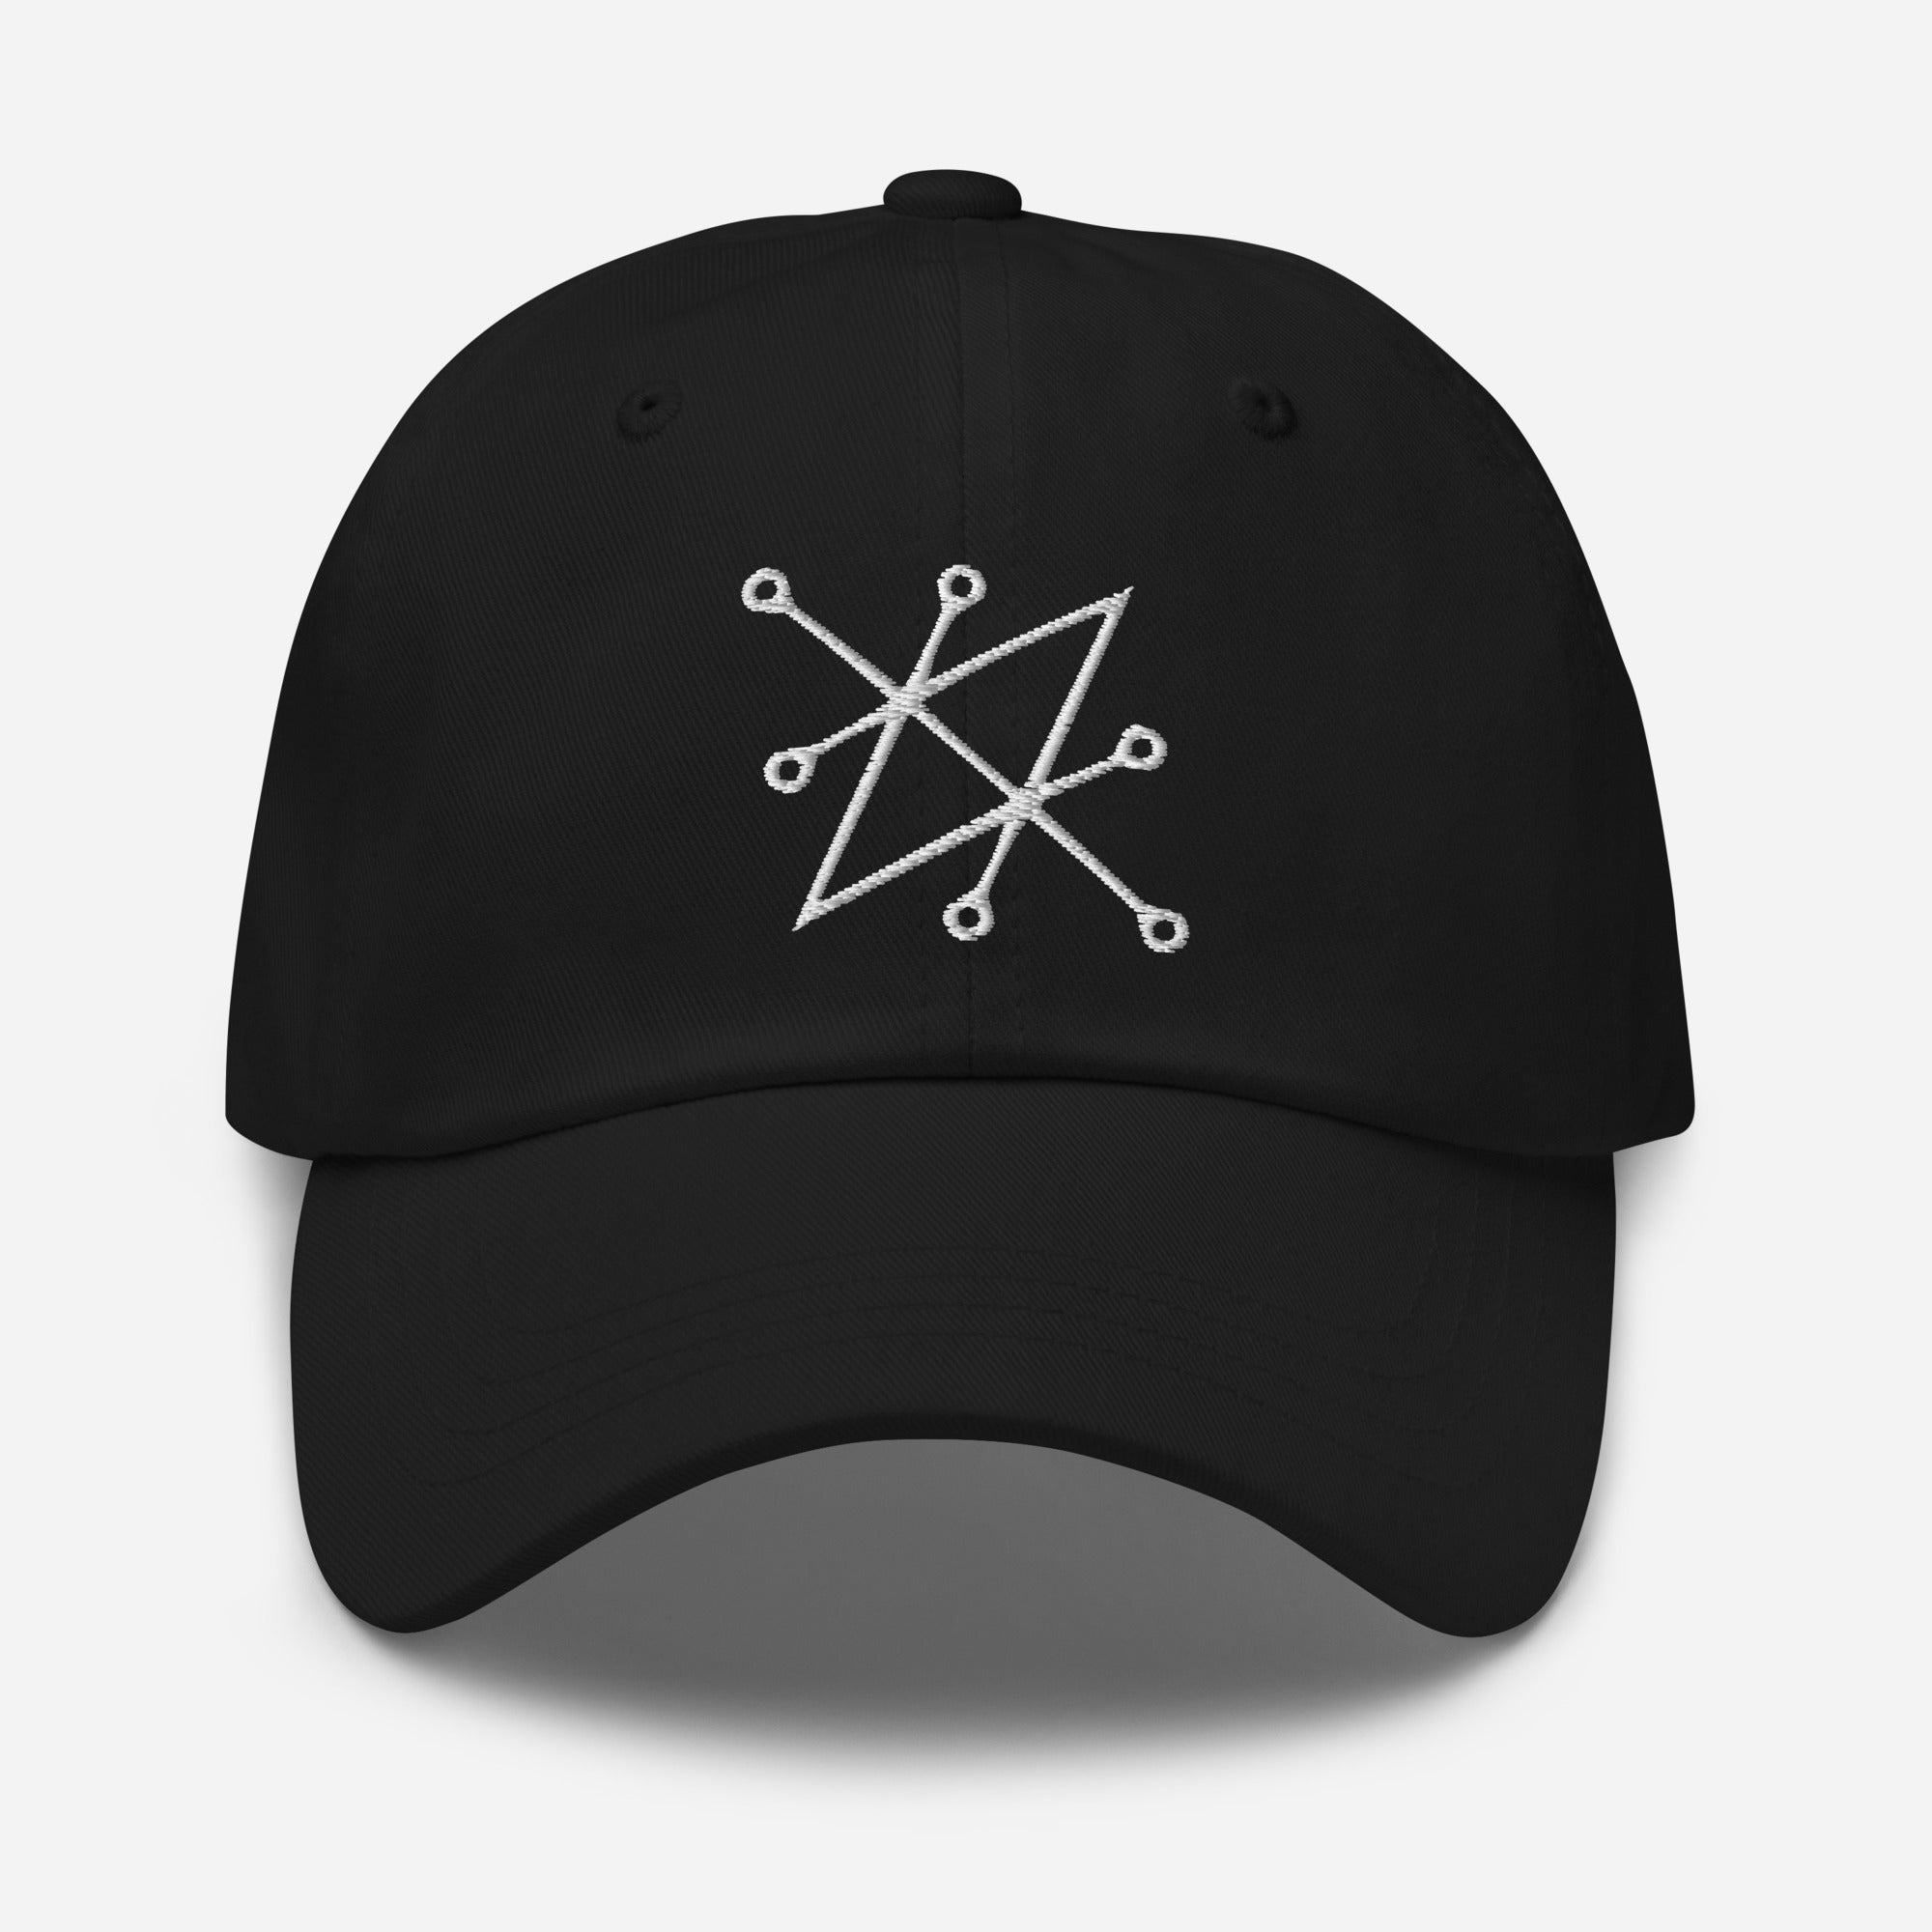 White Sigil of Fallen Angel Azazel Occult Symbol Embroidered Baseball Cap Dad hat